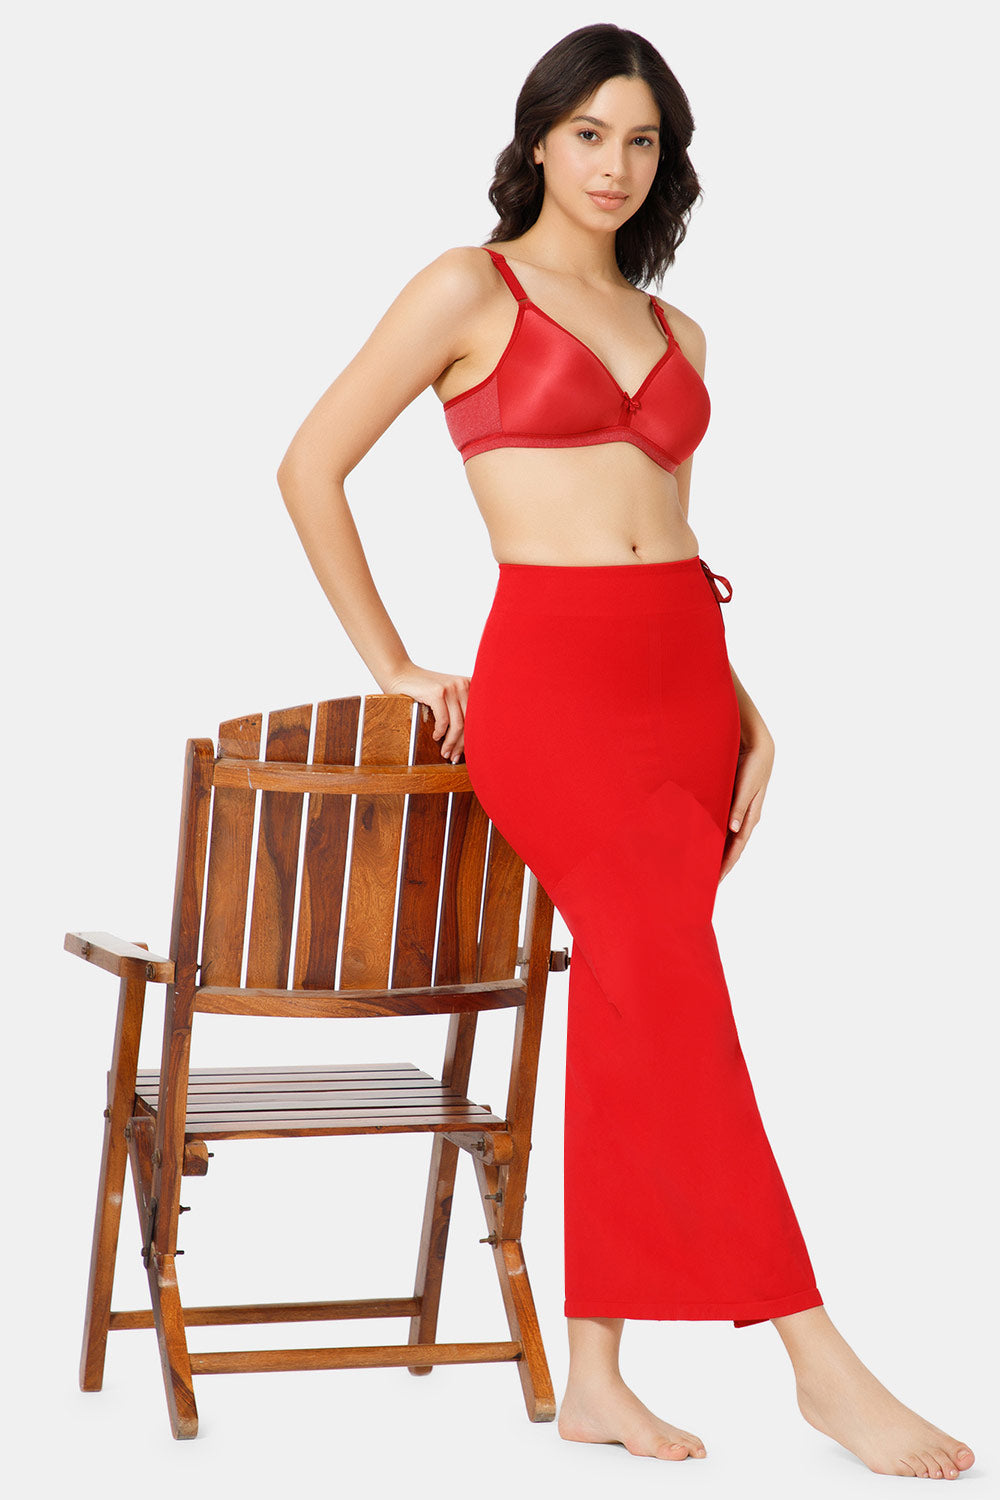 Intimacy Seamless Sweat Absorbent Mermaid Saree Shapewear - Red - SW02